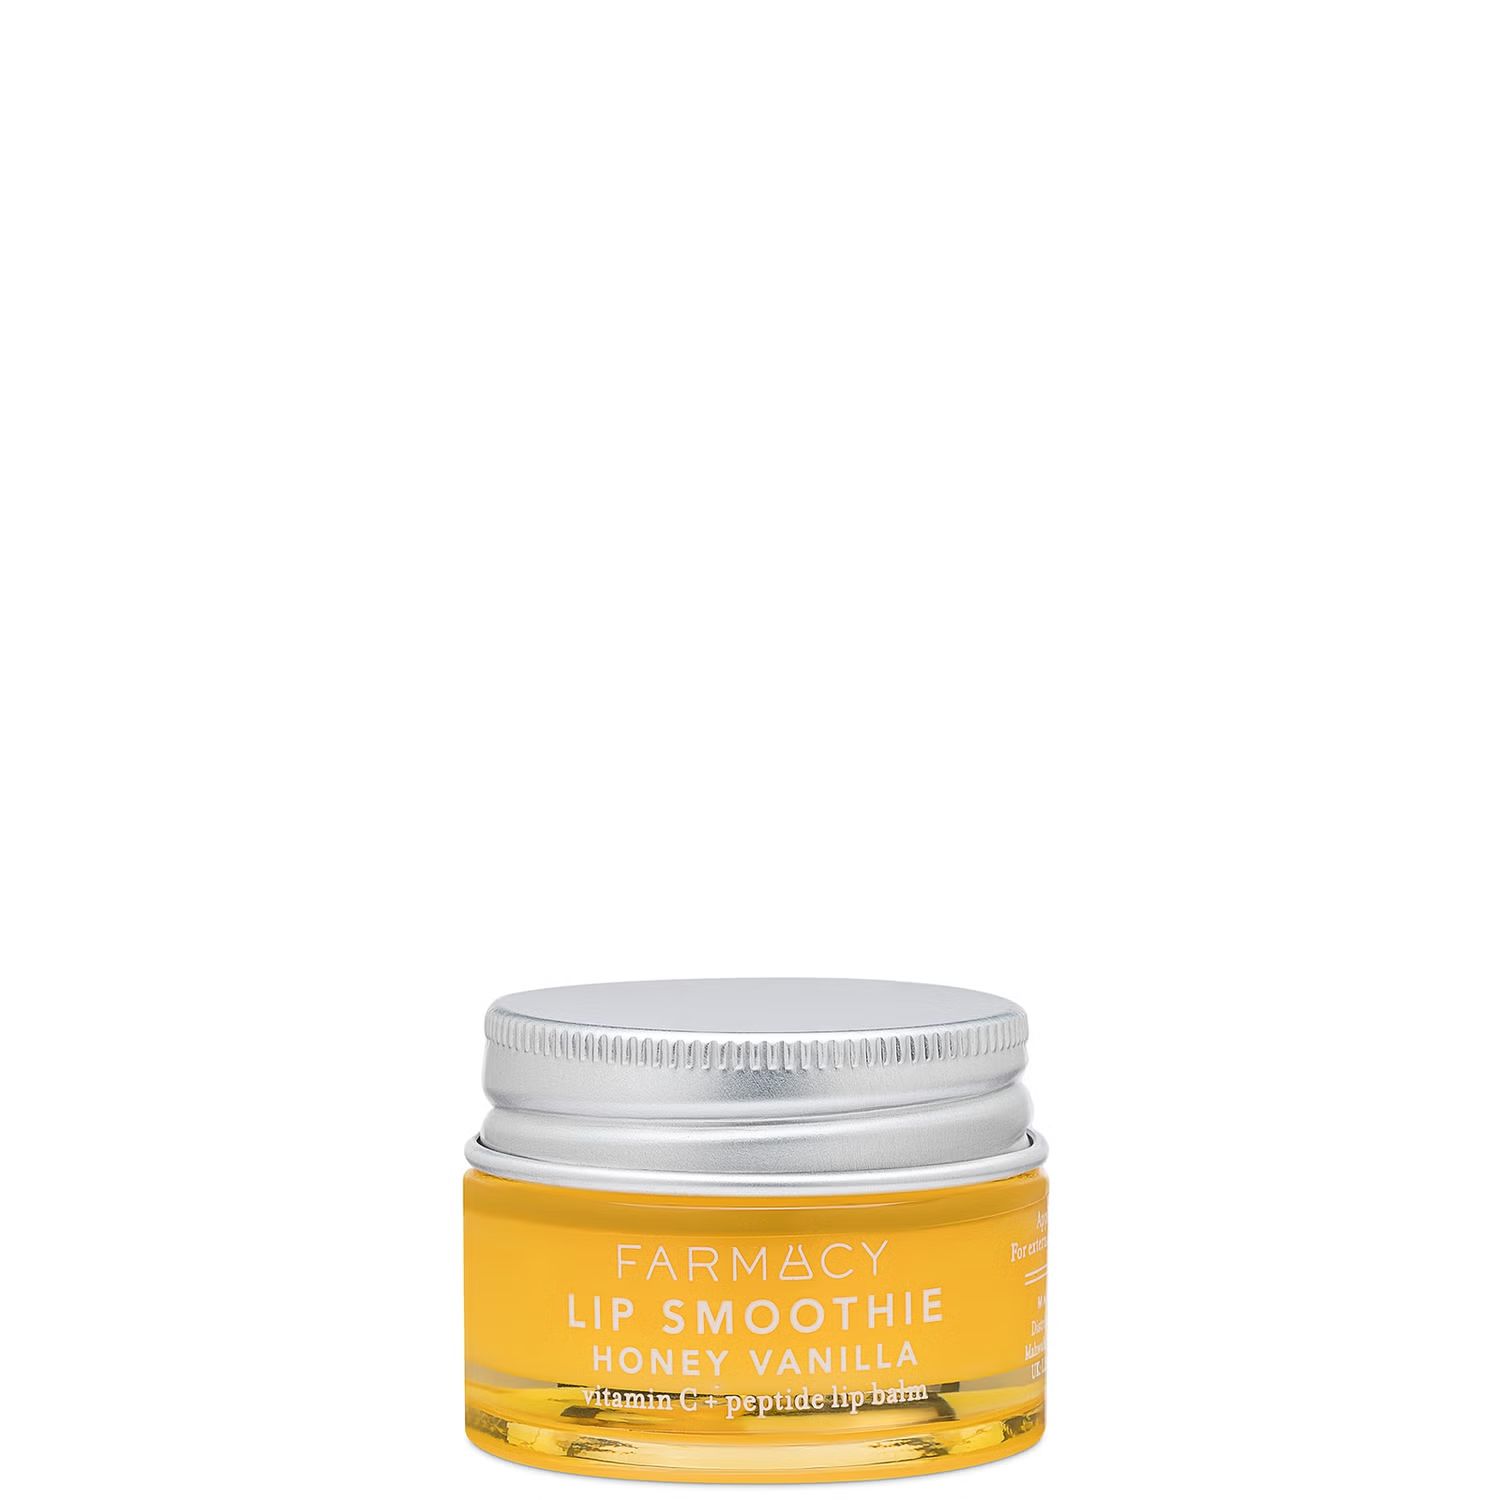 FARMACY Lip Smoothie Vitamin C + Peptide Lip Balm 10g - Honey Vanilla | Cult Beauty